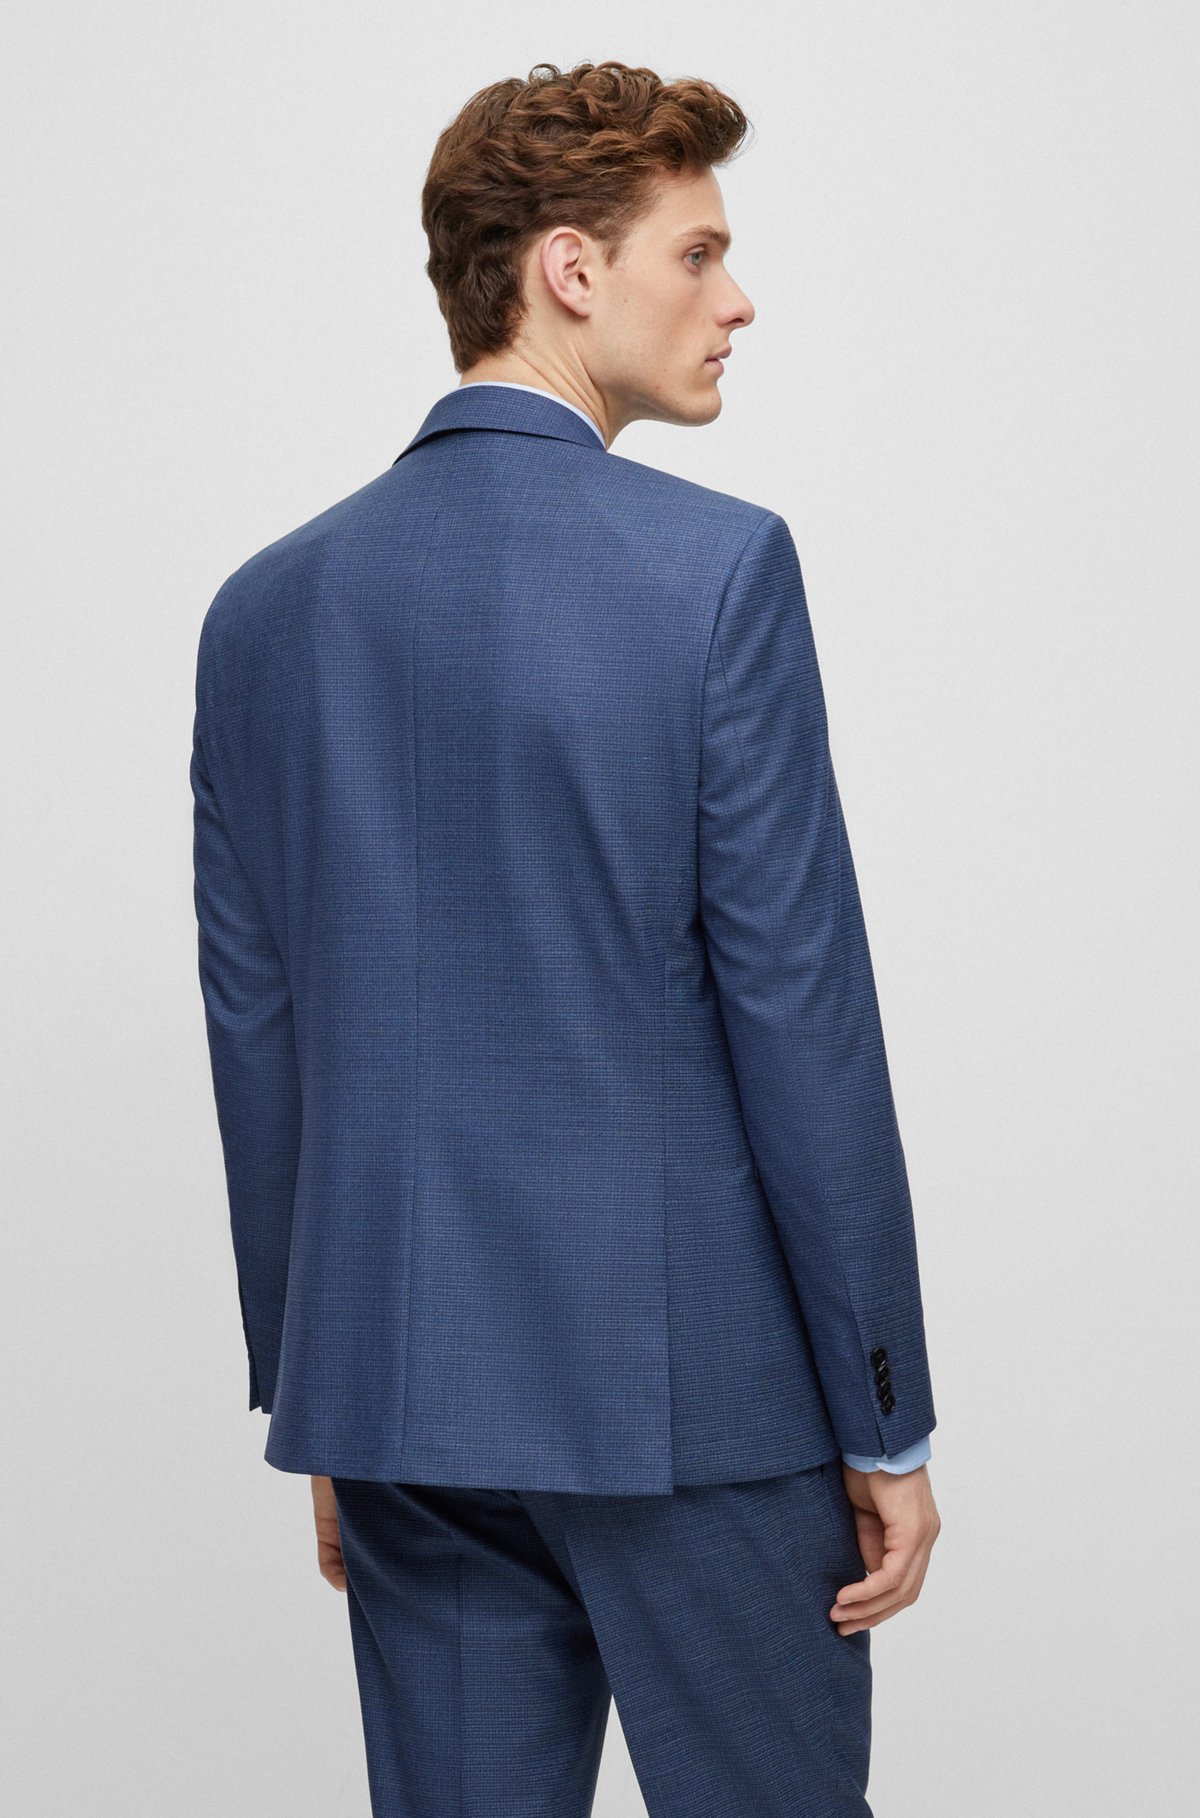 Regular-fit suit in a micro-patterned wool blend, Dark Blue